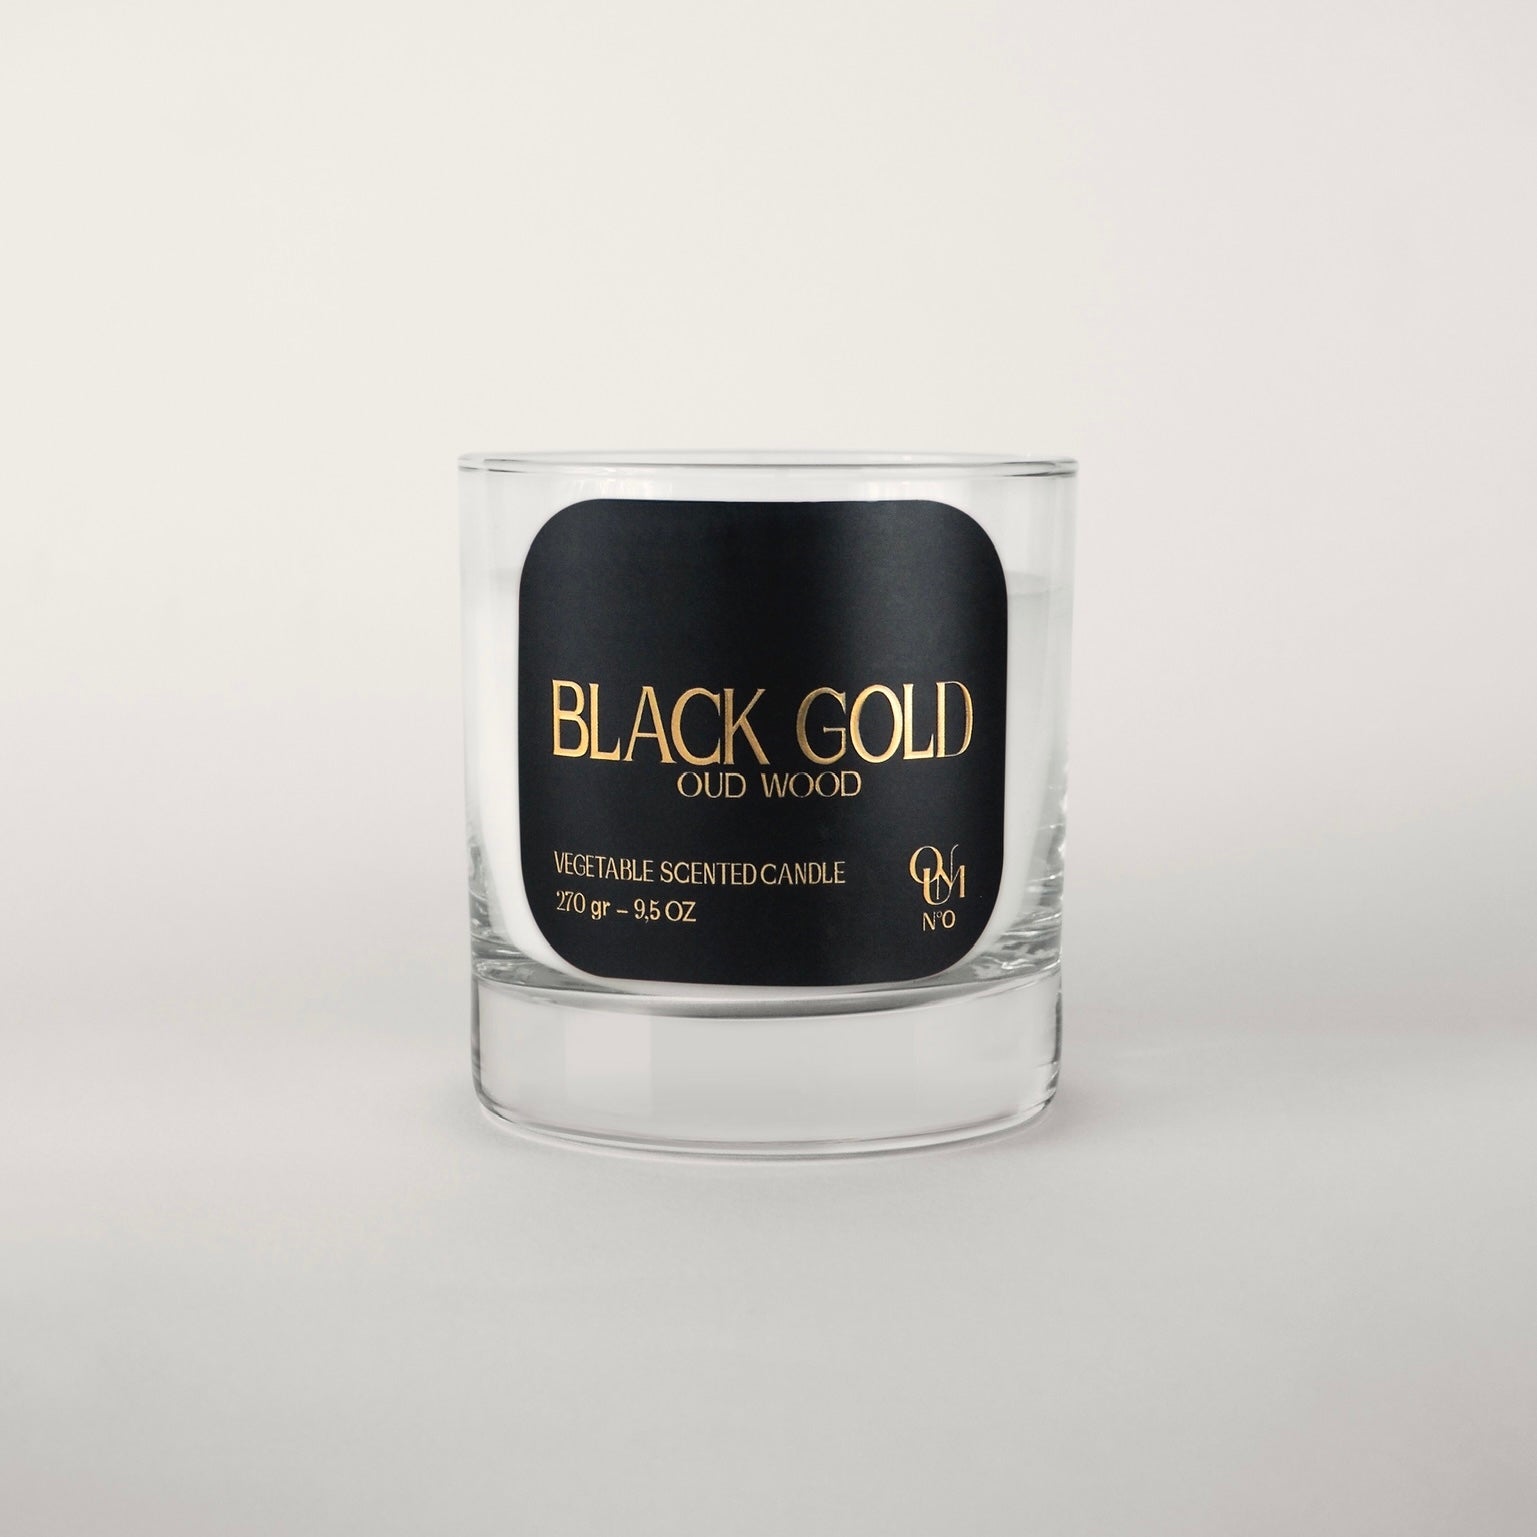 BLACK GOLD - Oud Wood - Oum Series